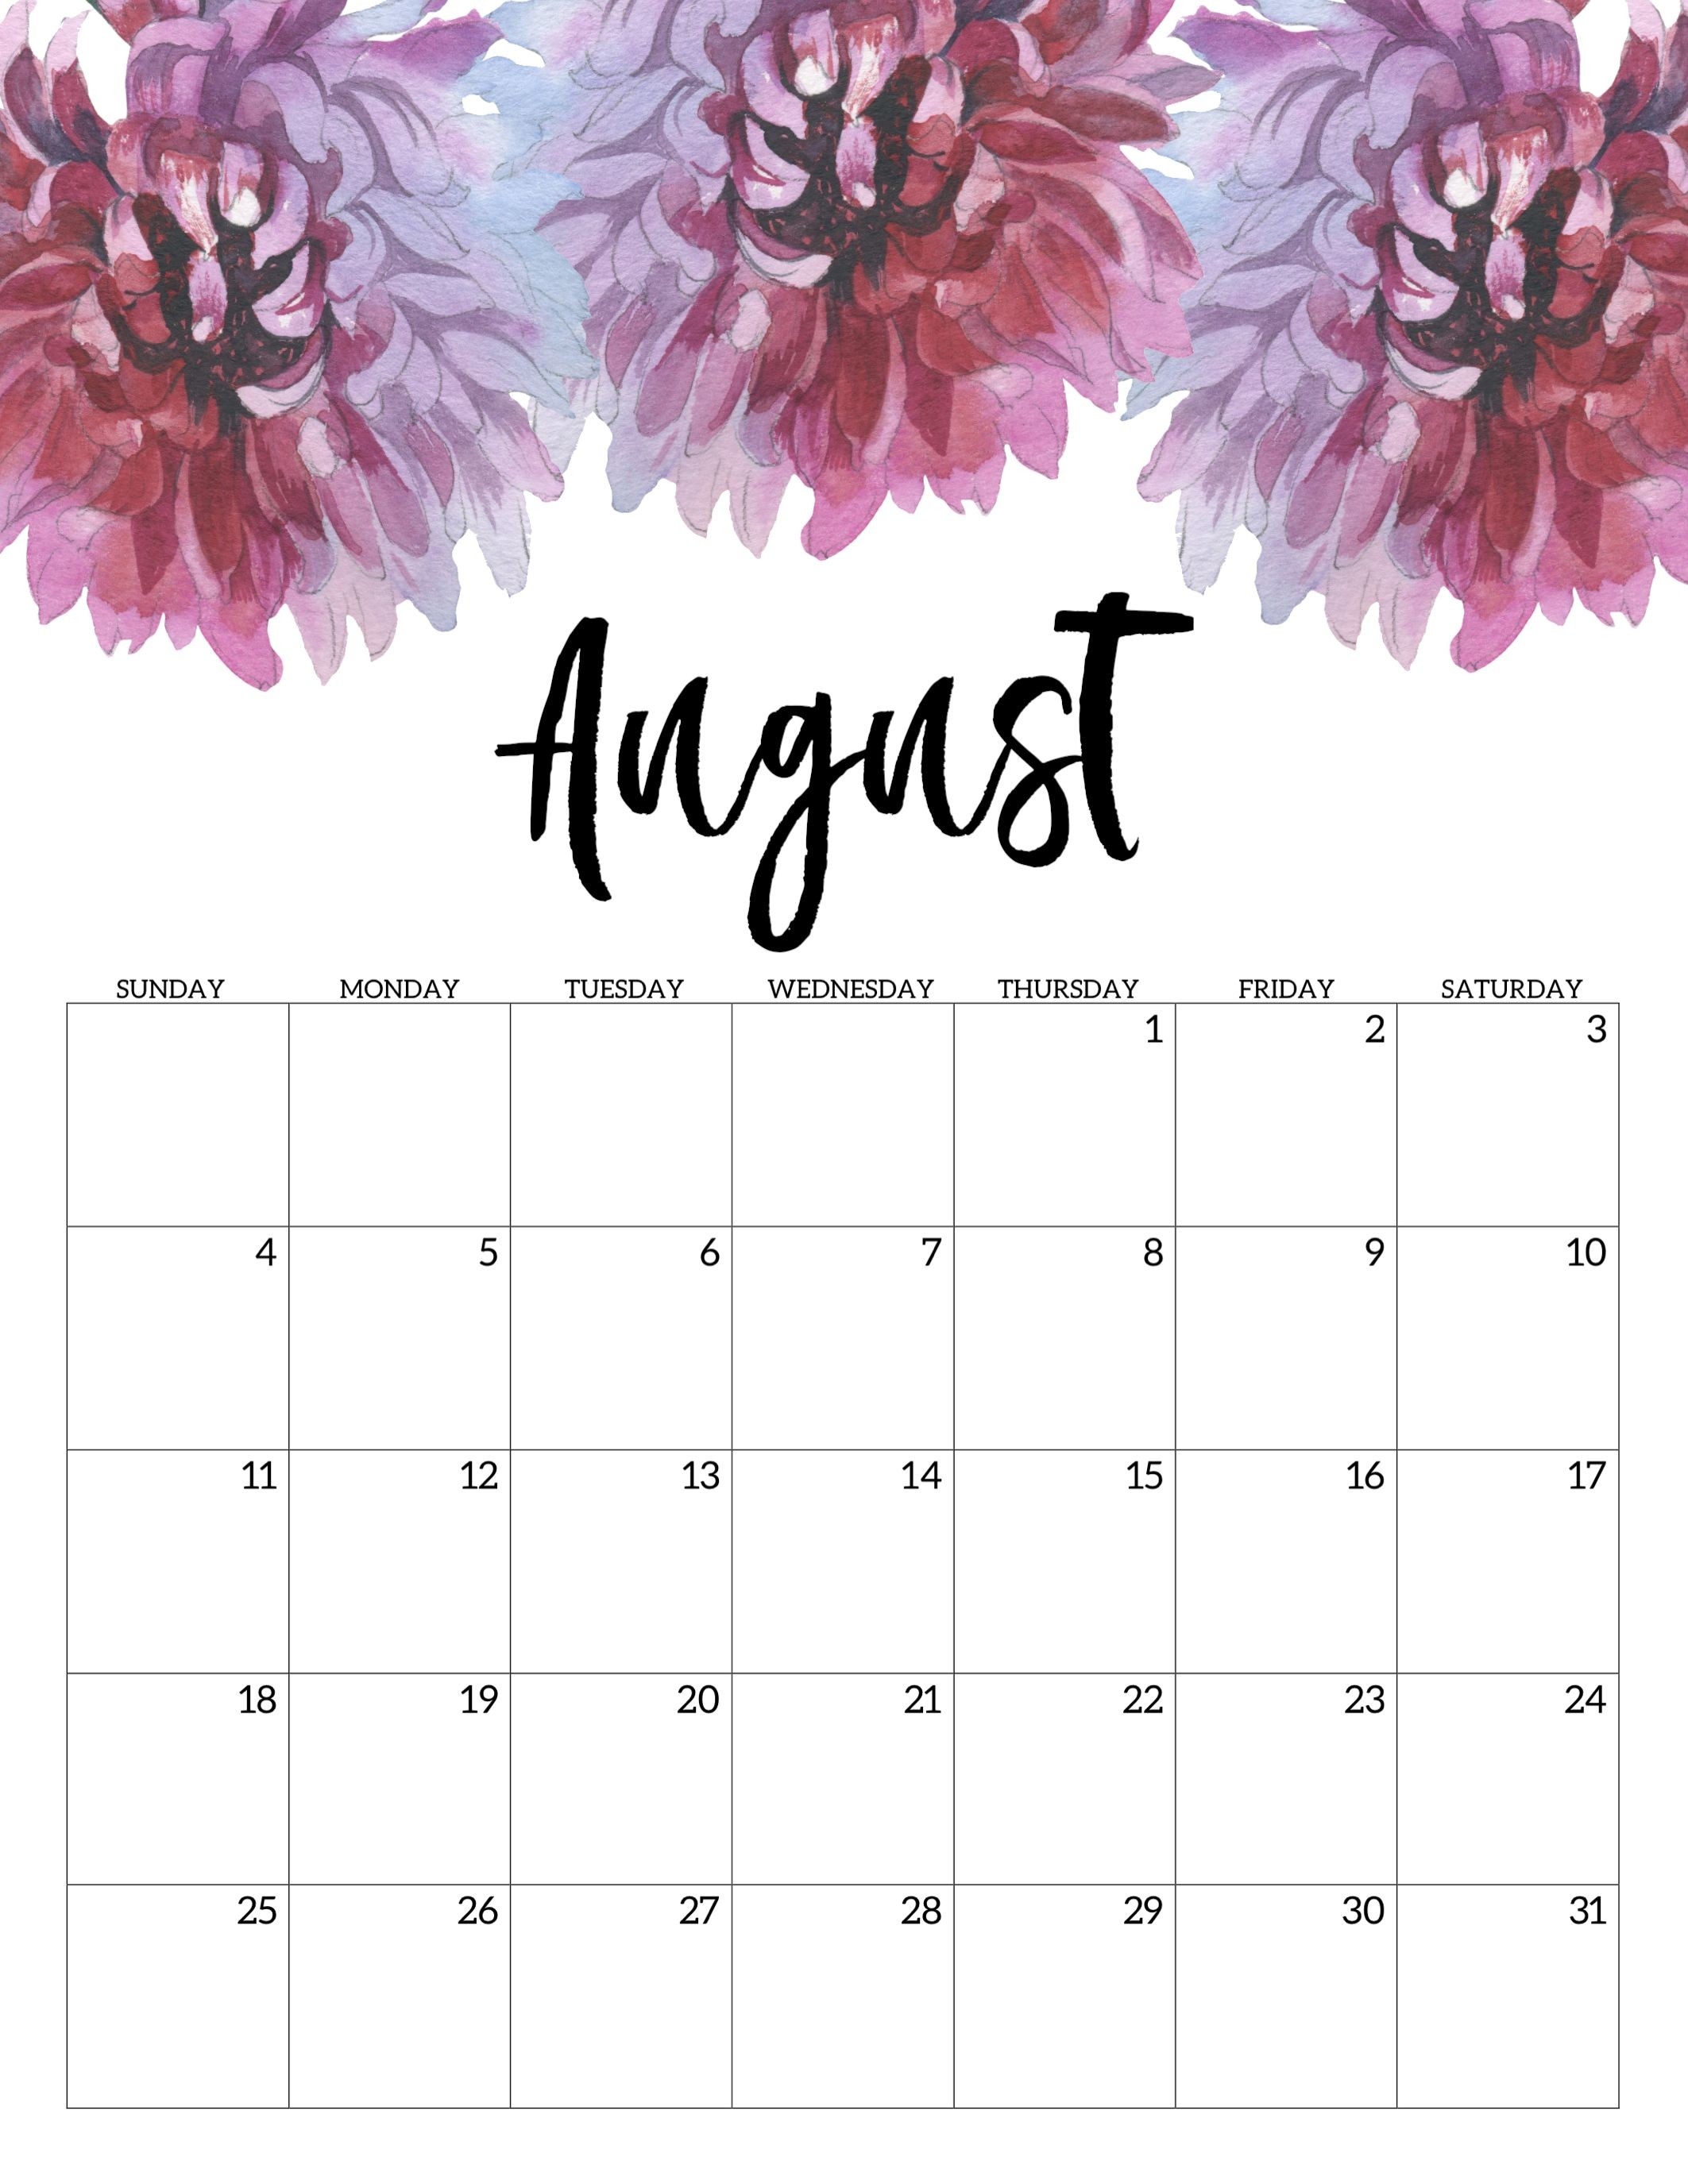 August 2019 Floral Calendar #august #august2019  Monthly Calendar August  2020 8 X 11